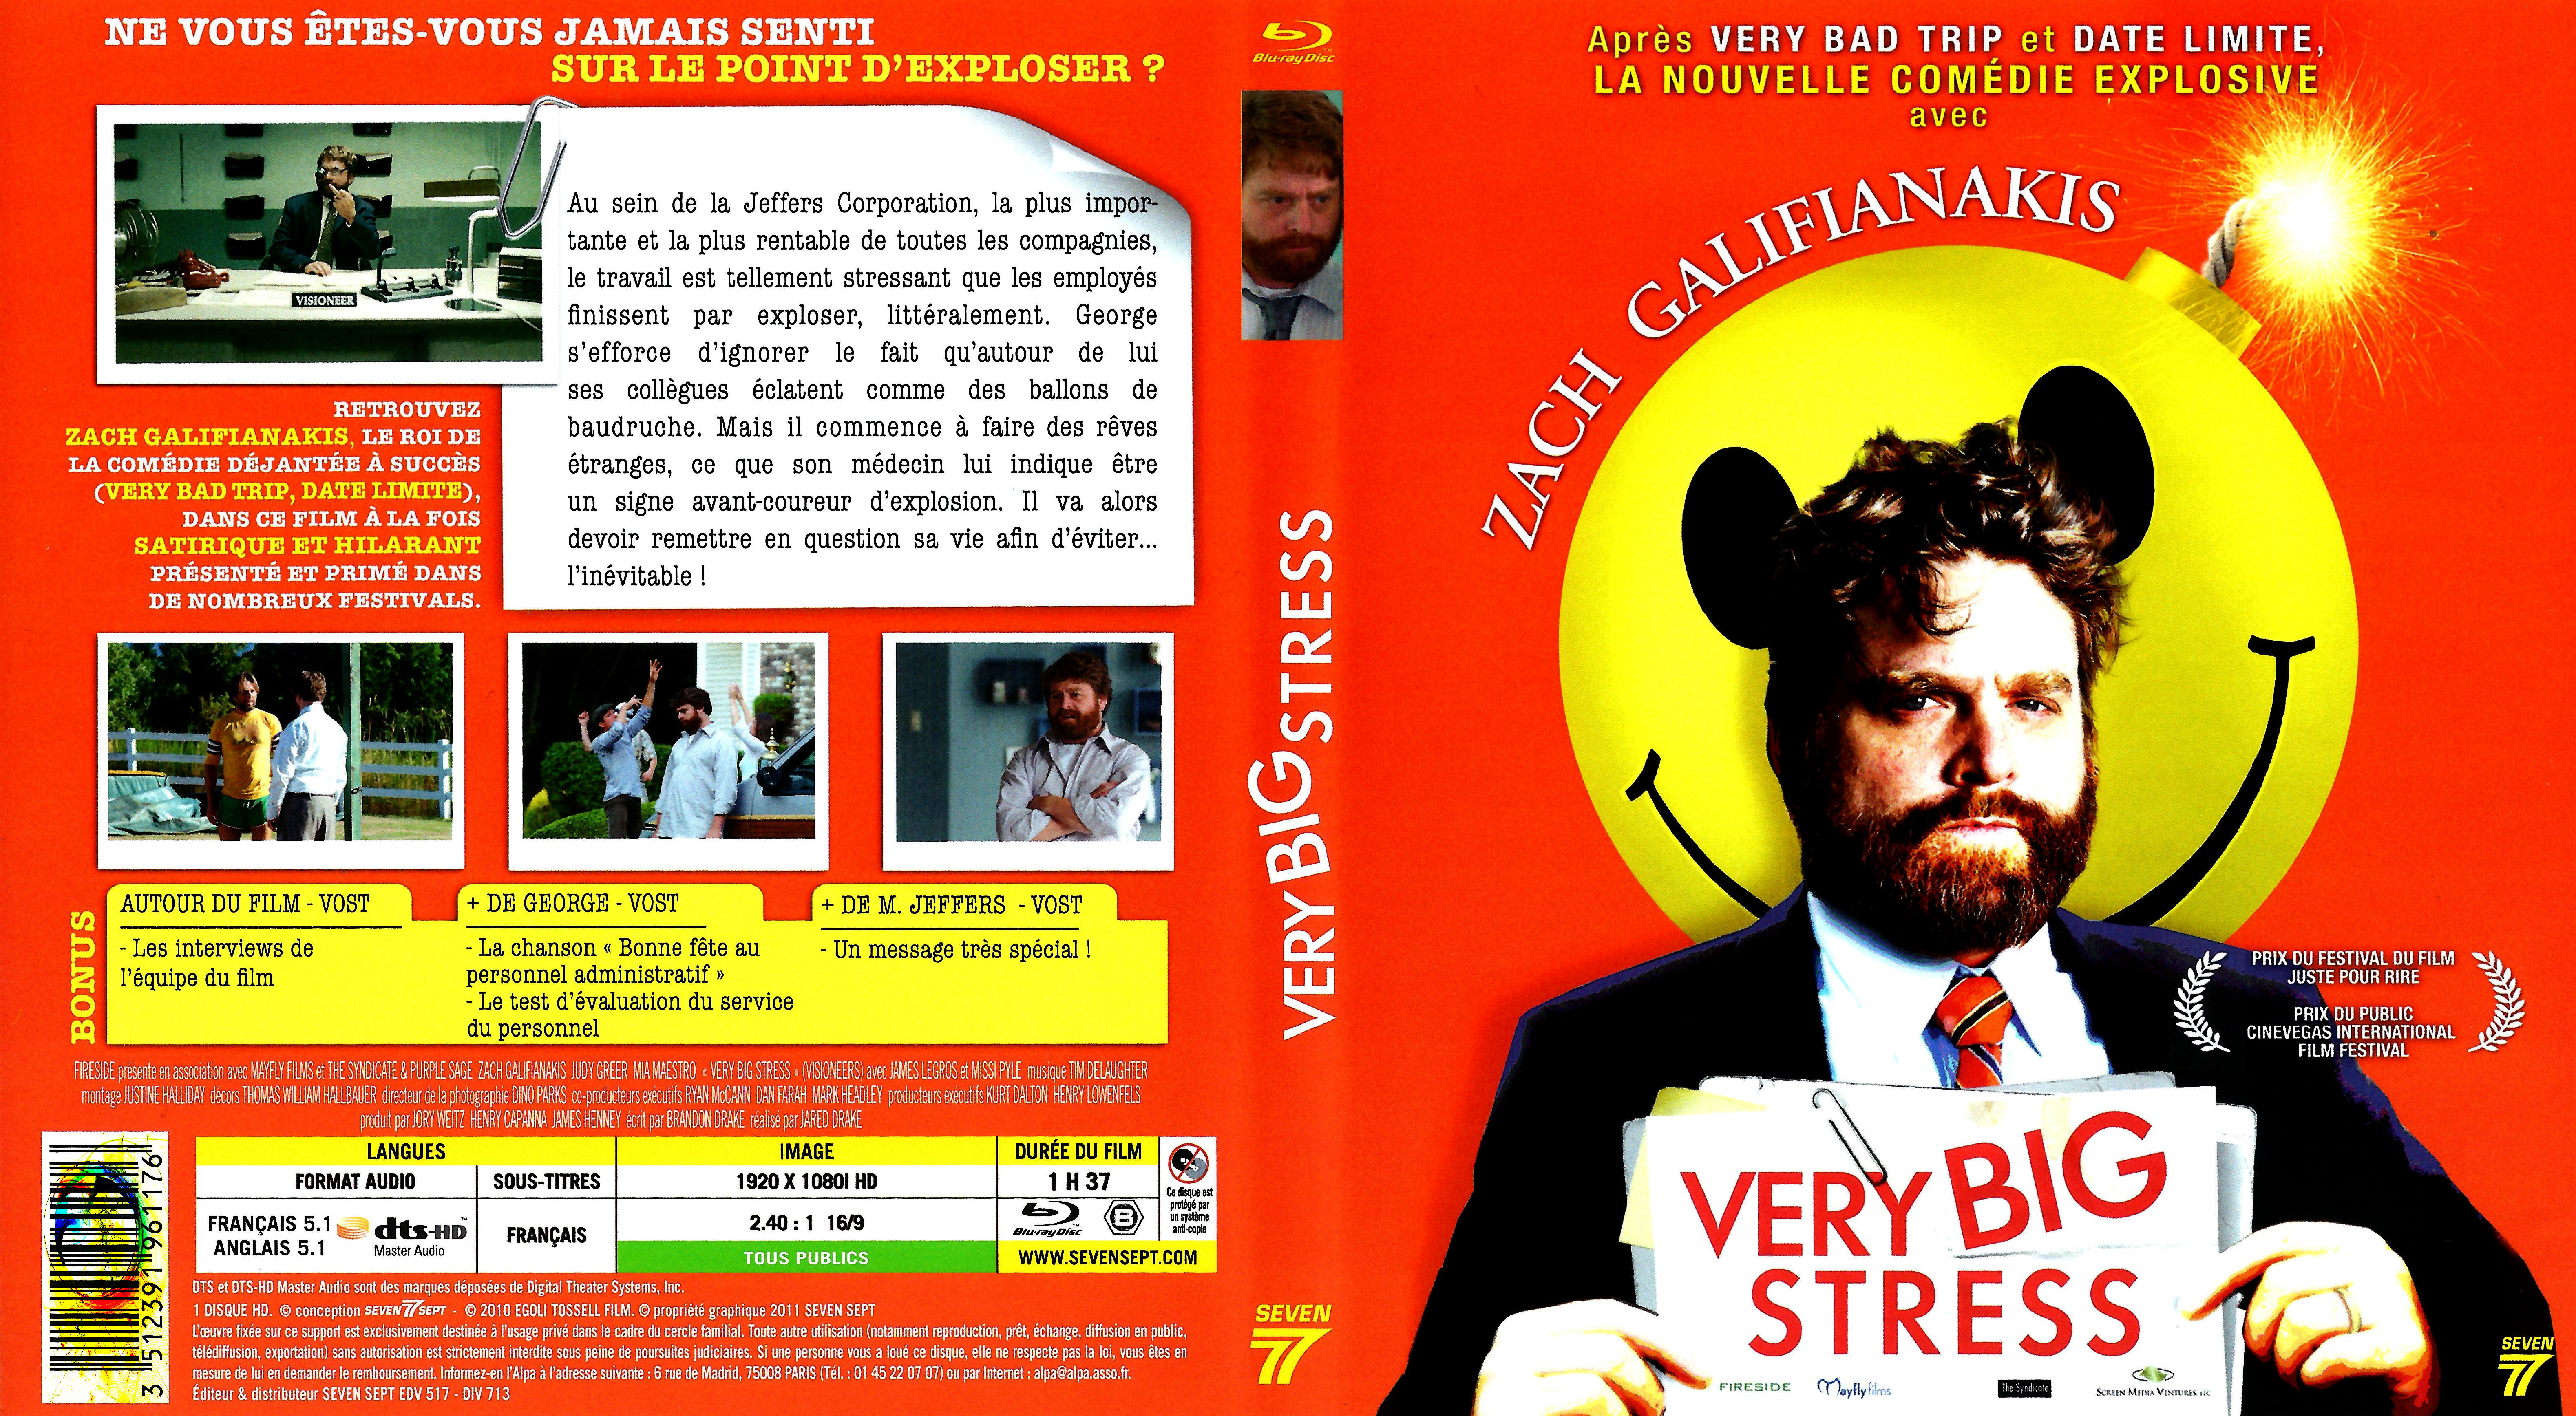 Jaquette DVD Very big stress (BLU-RAY)